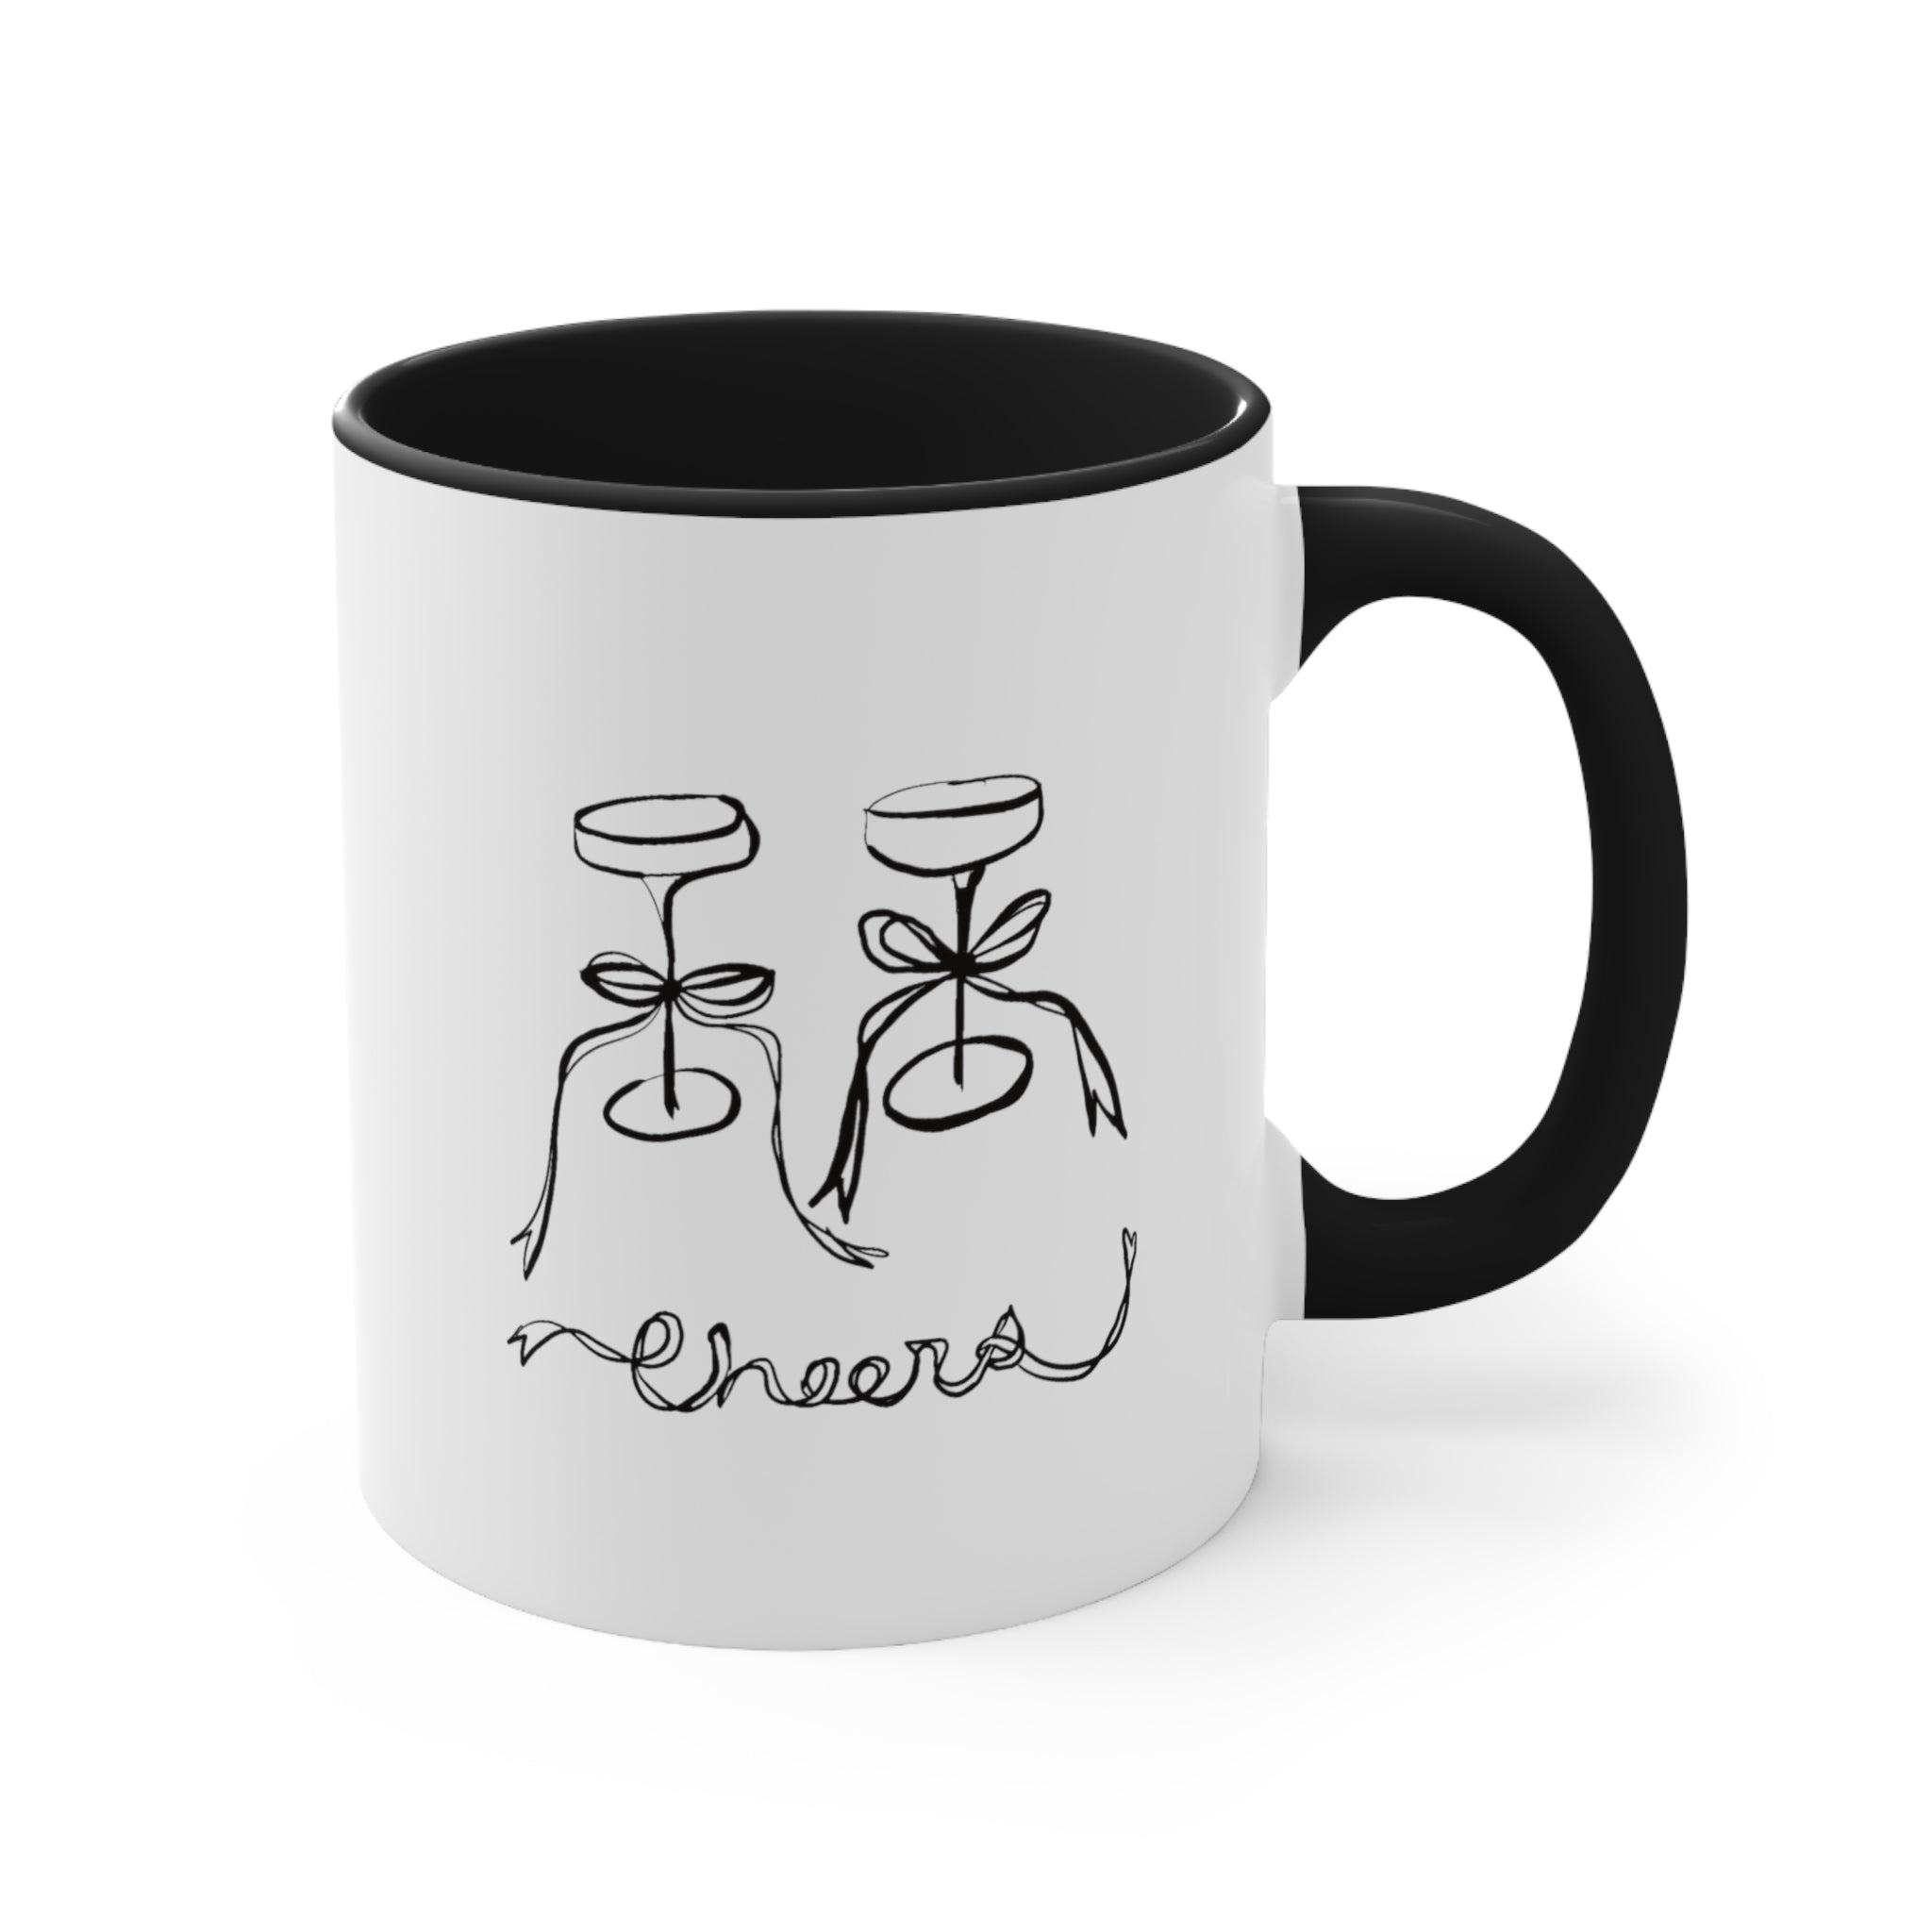 Cheers! Coffee Mug, 11oz